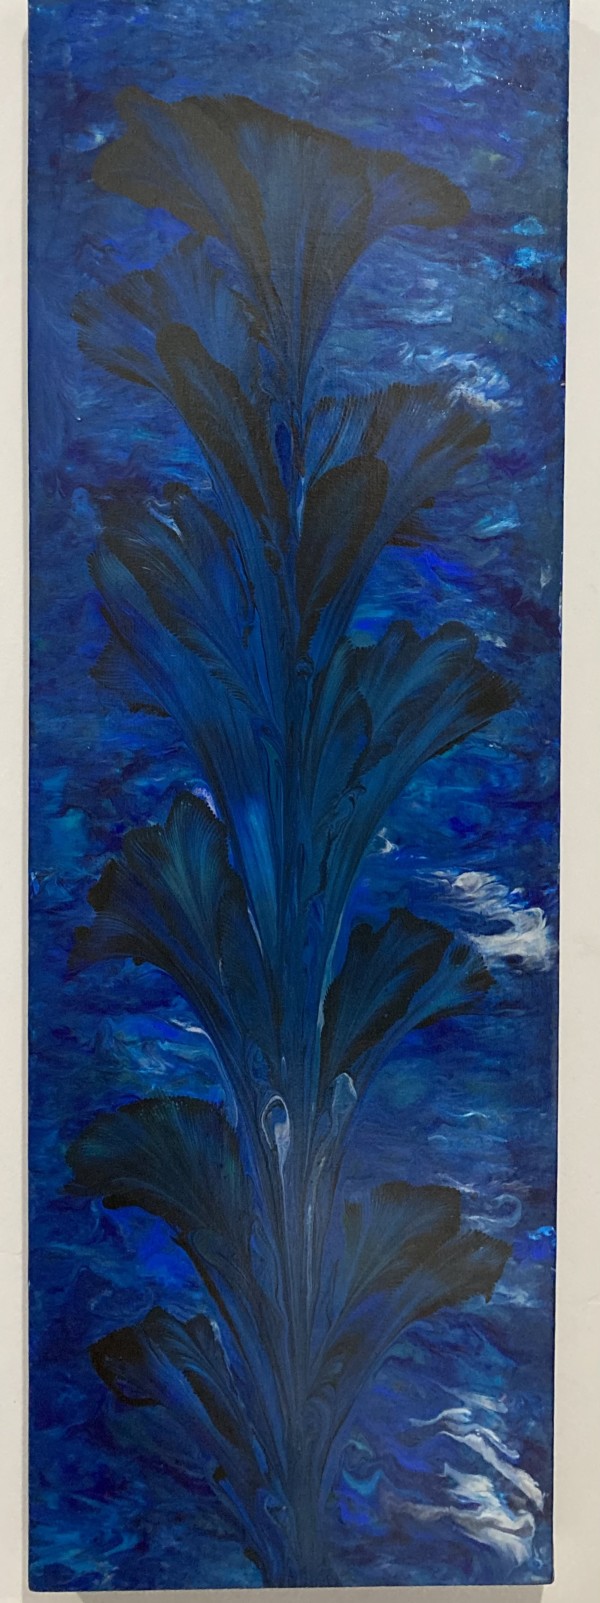 Black Flower on Blue 2 and 3 by Helen Renfrew